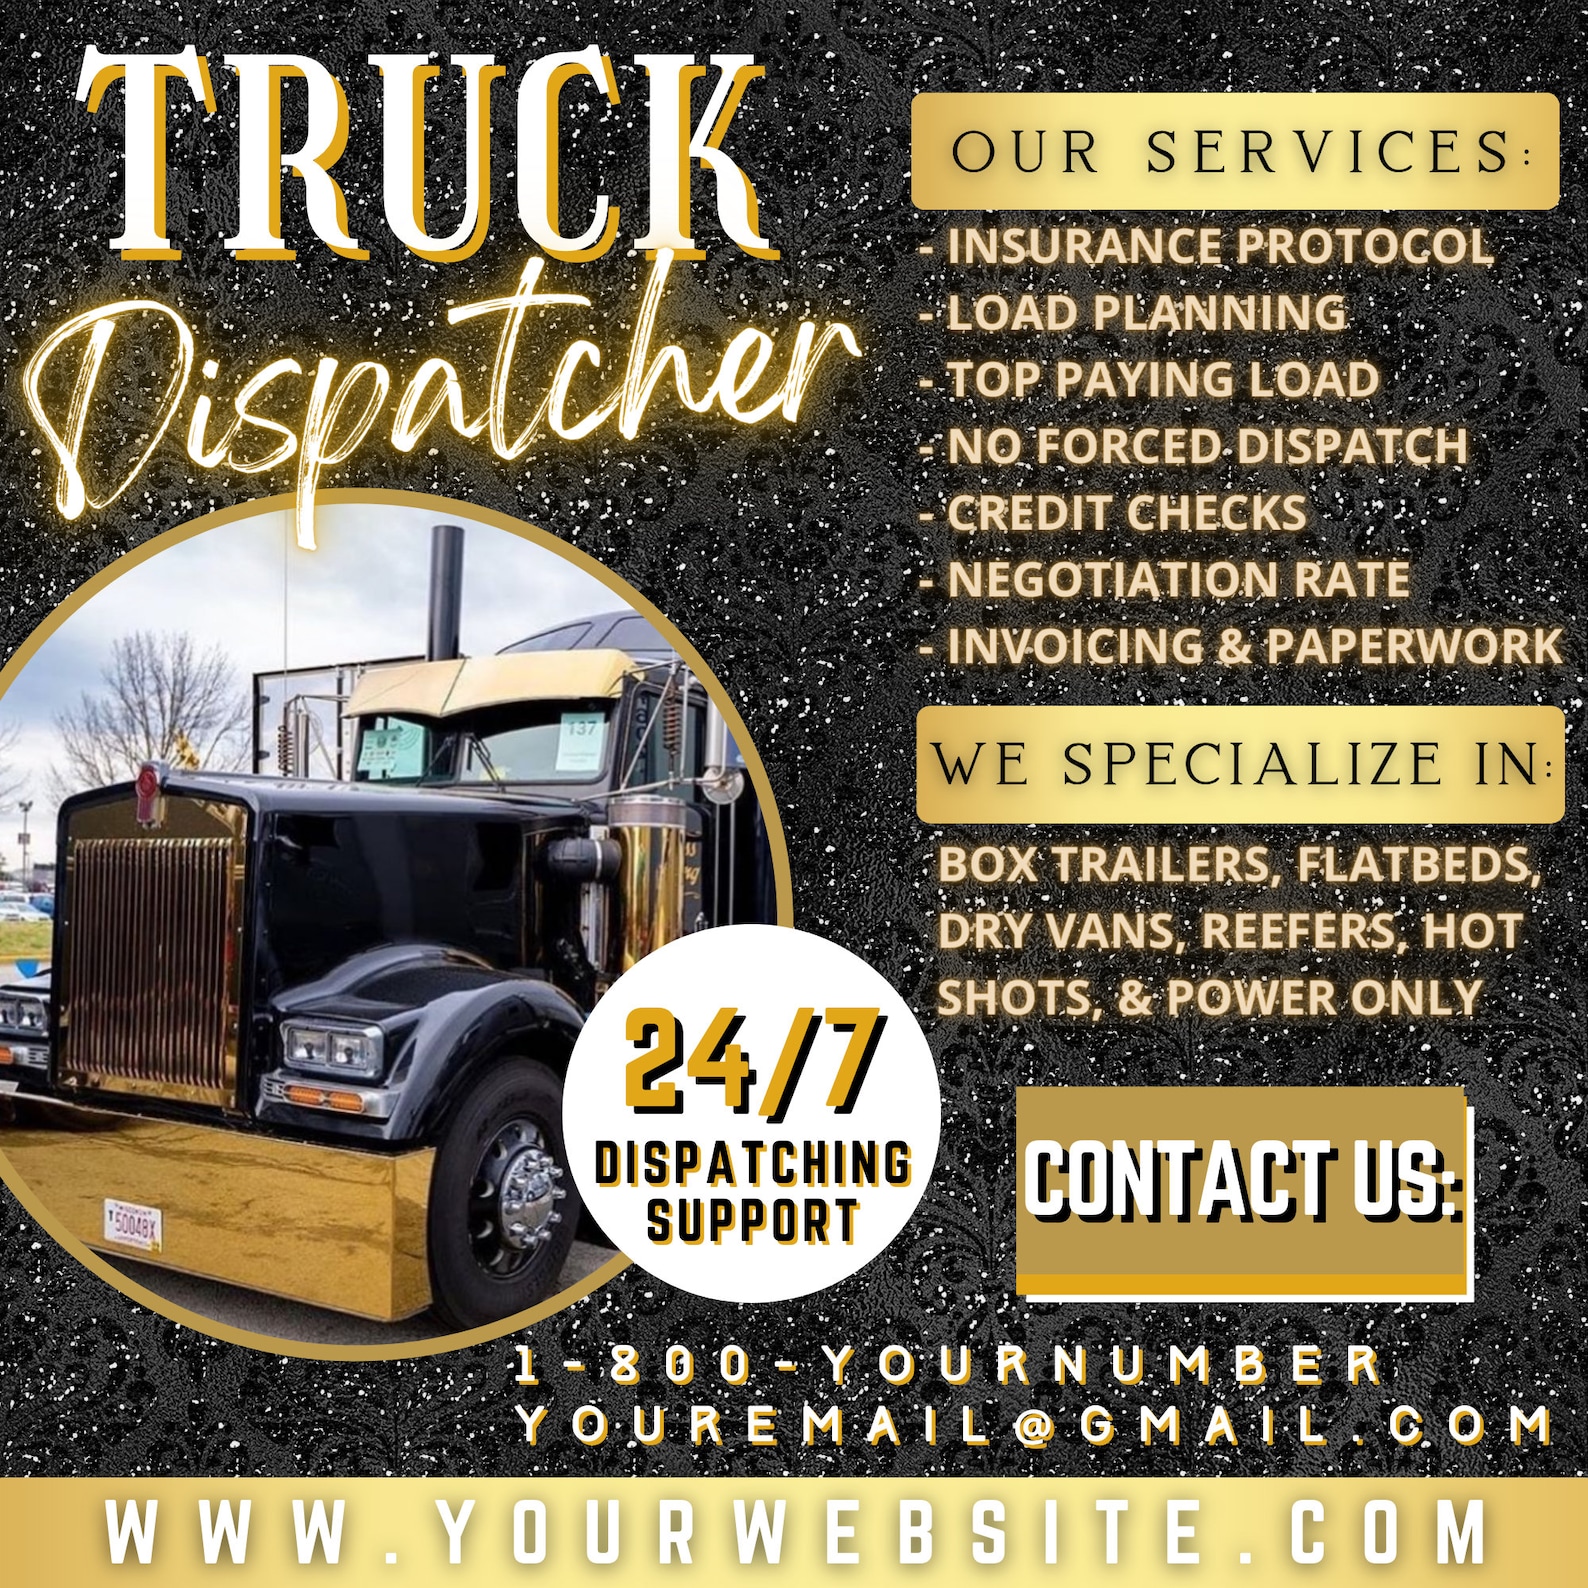 truck dispatcher business cards 3